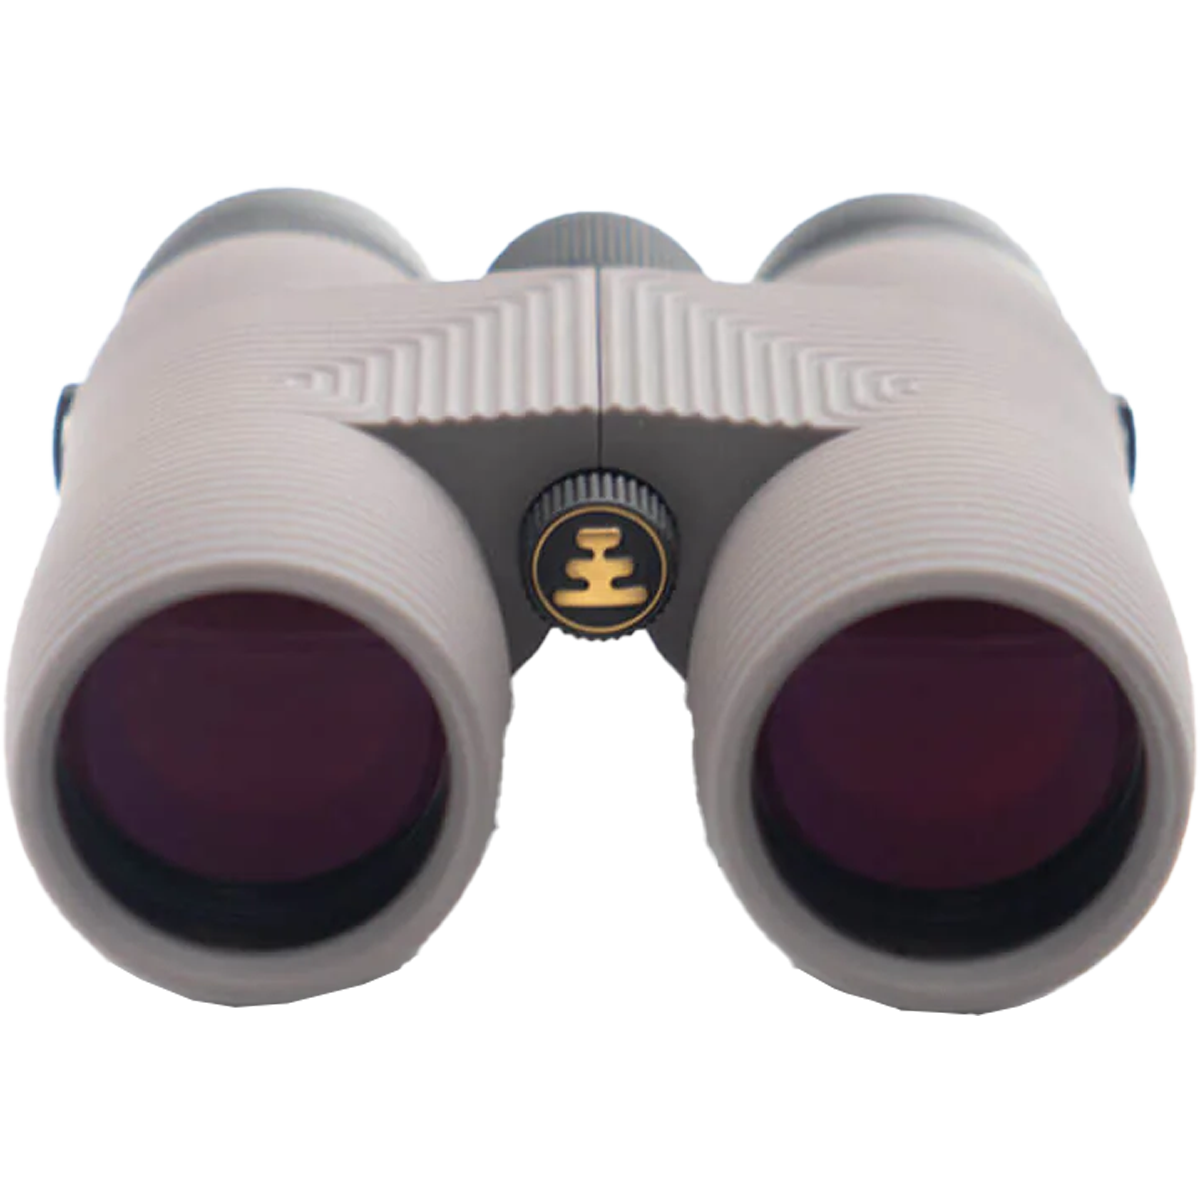 Pro Issue 10x42 Binoculars alternate view